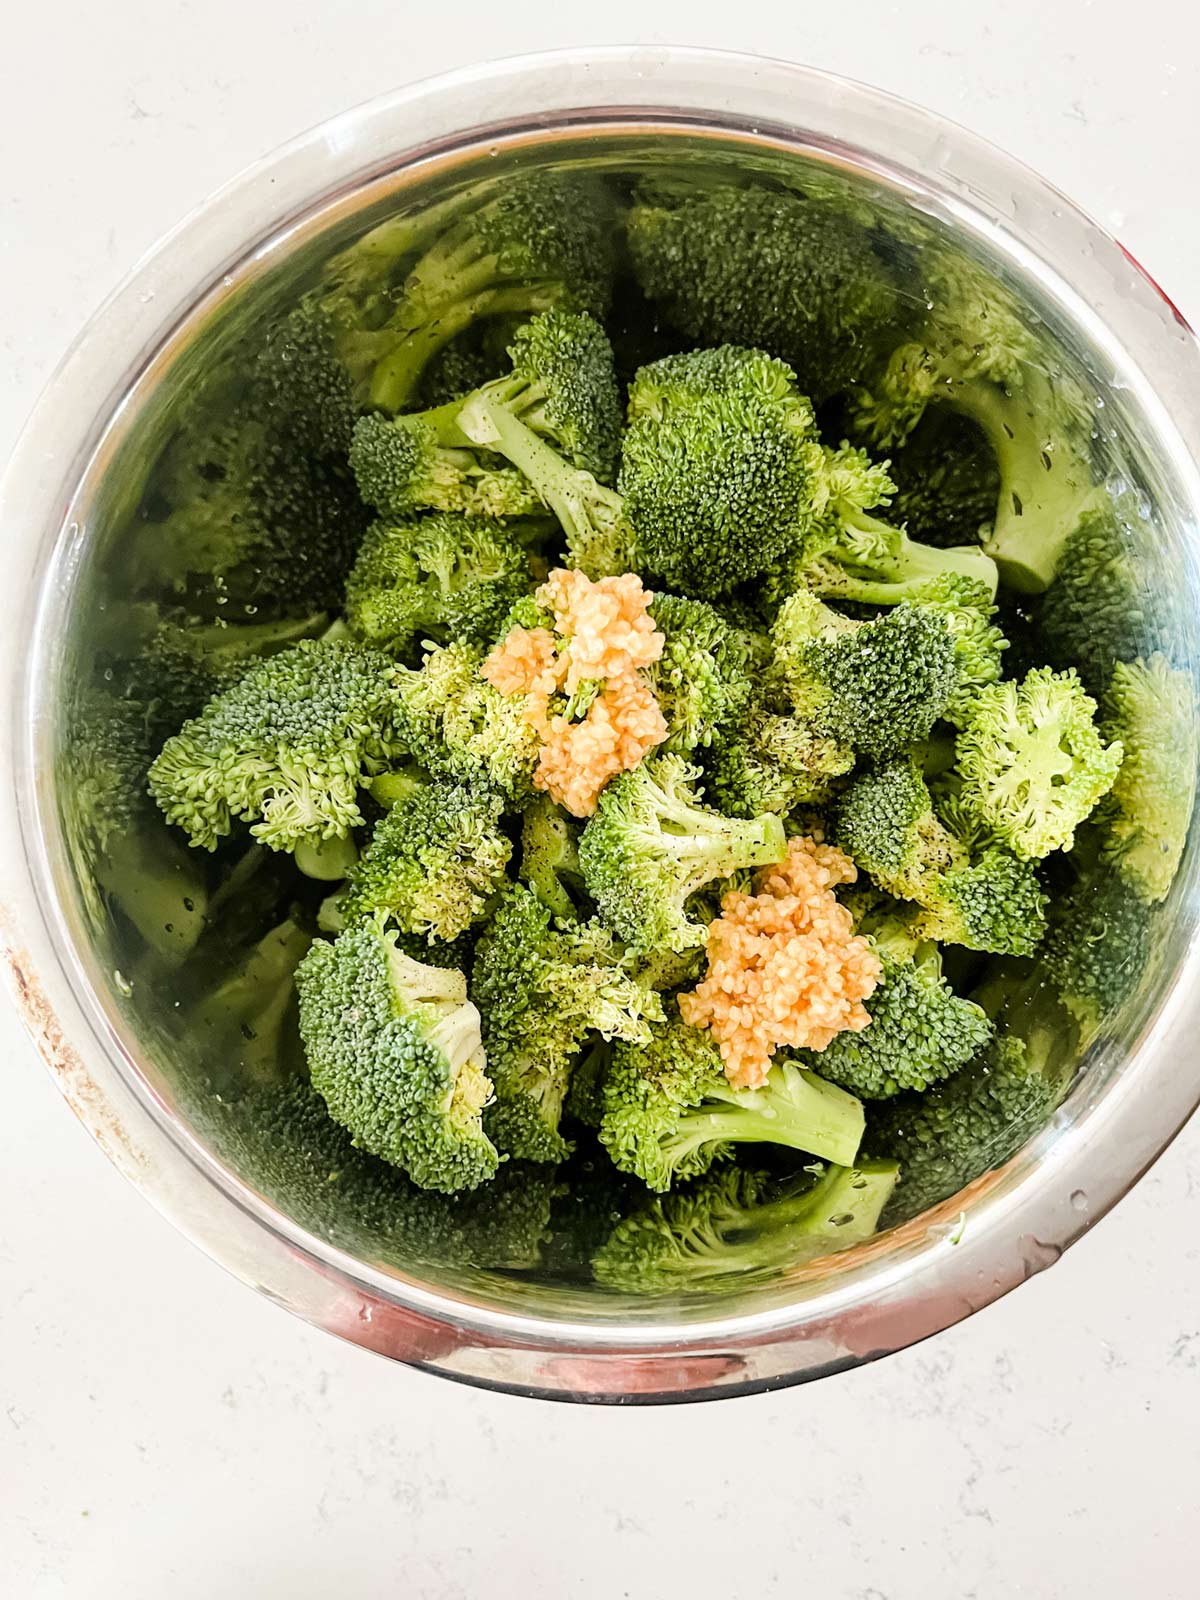 Garlic, broccoli and seasonings in a bowl.